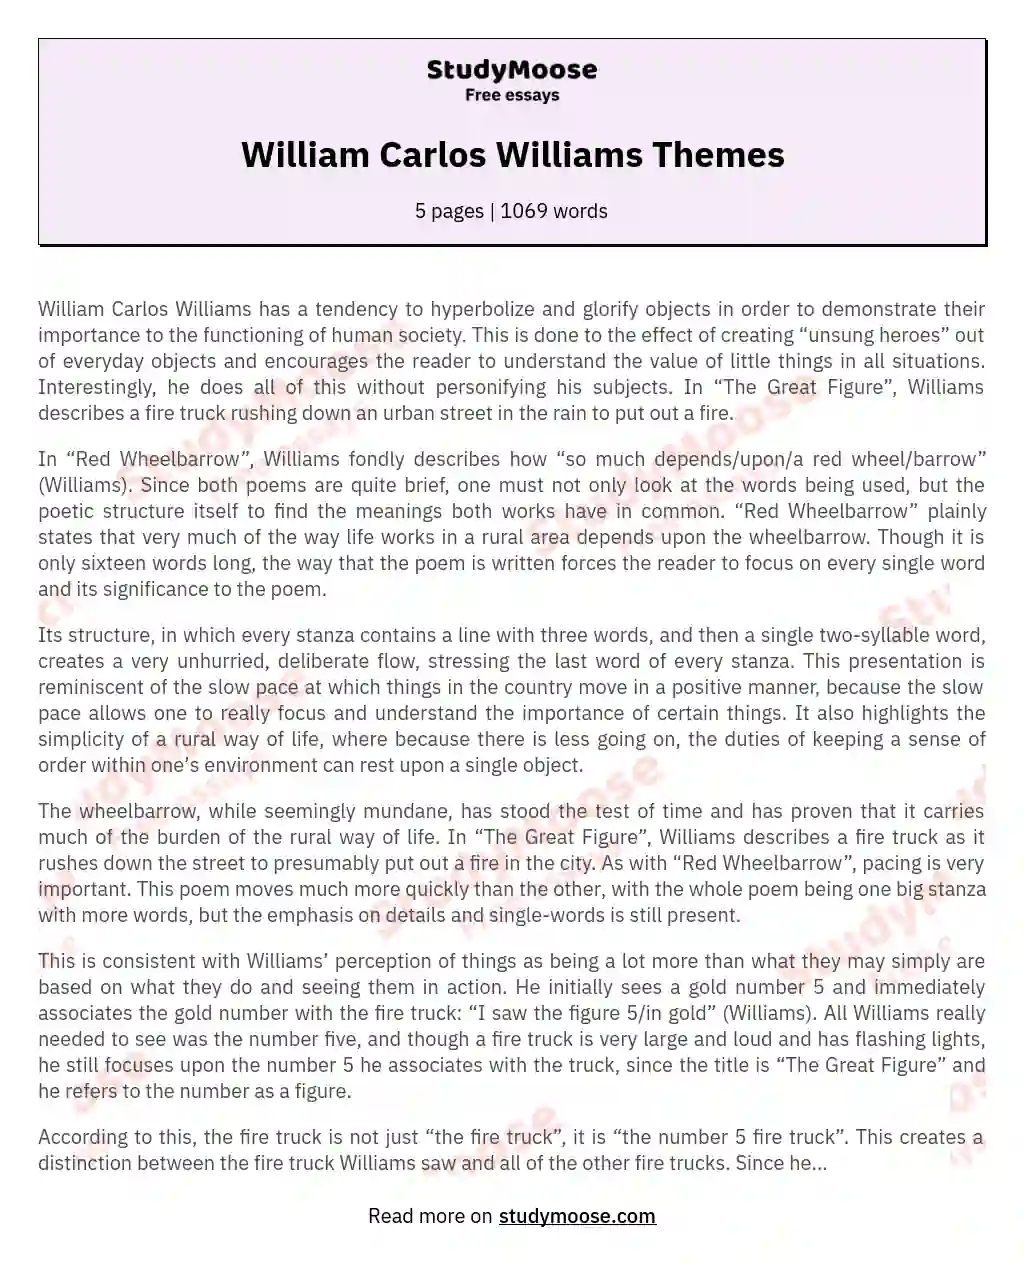 William Carlos Williams Themes essay